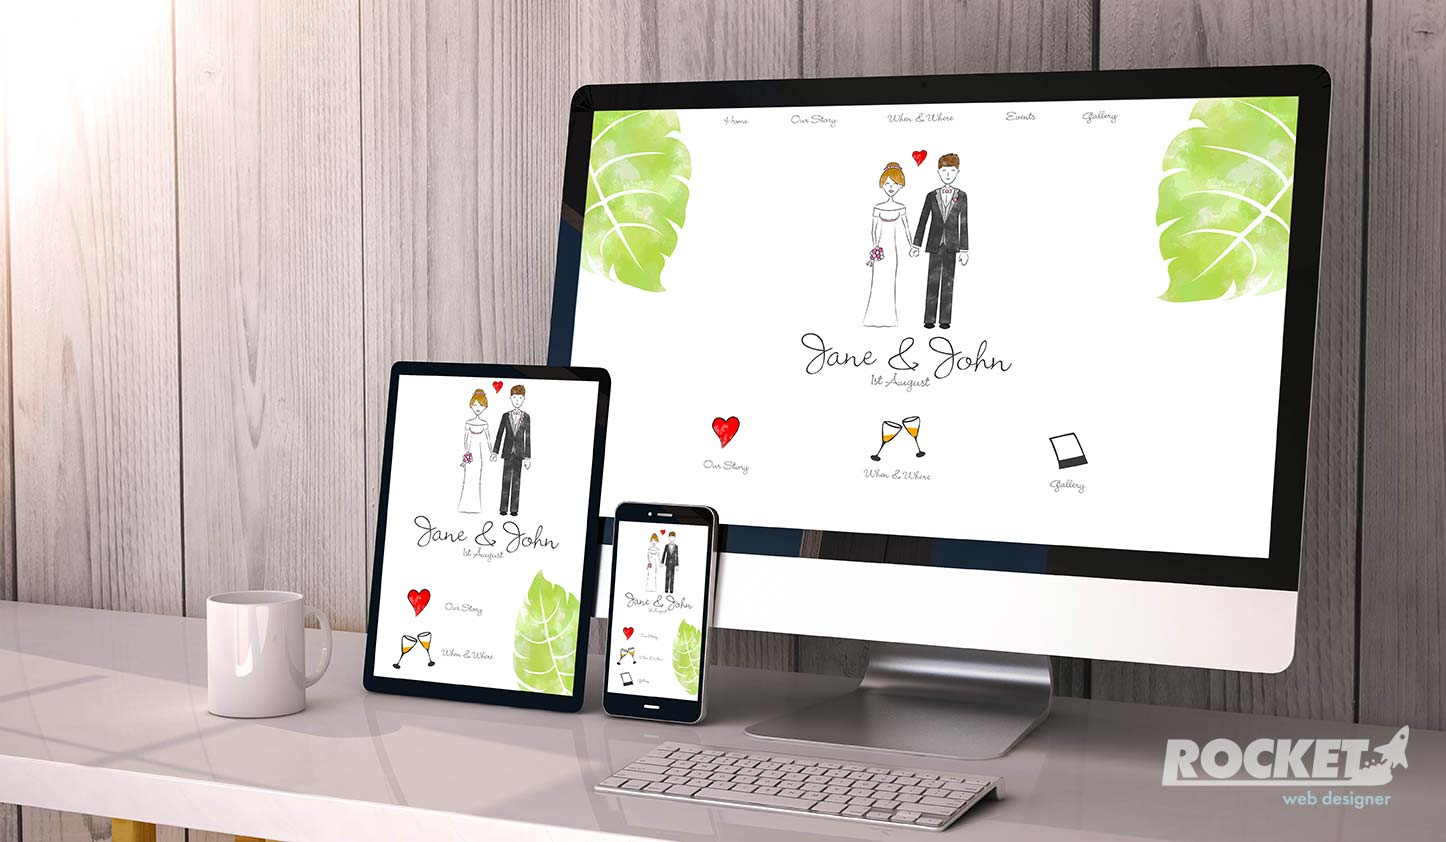 wedding web design rocket web designer - Professional Website Design Company